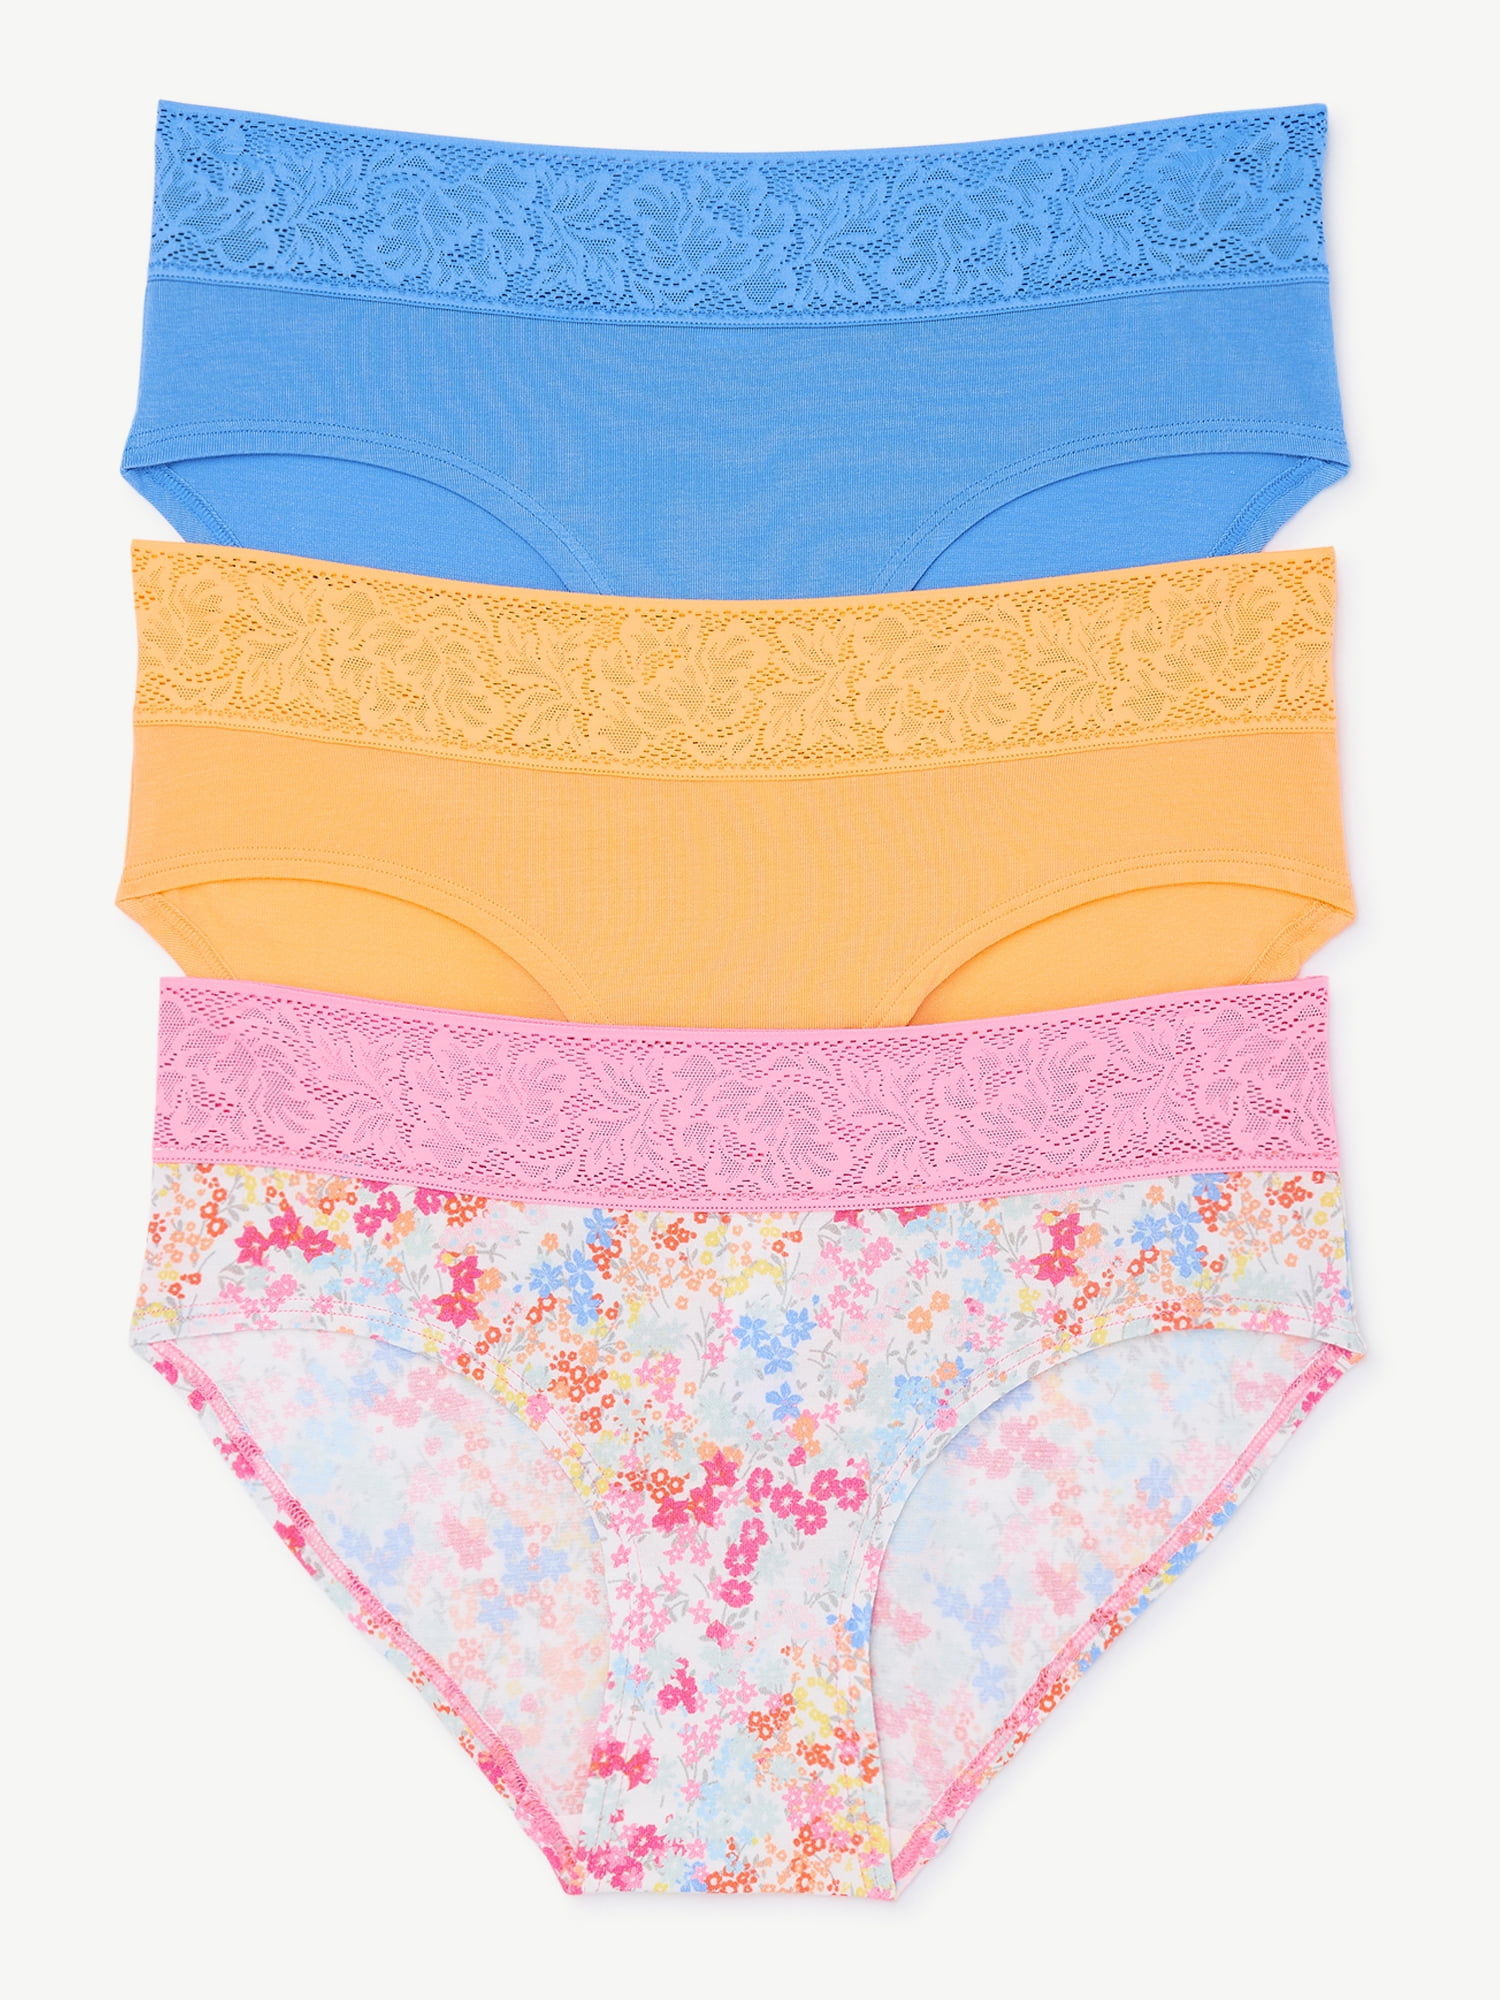 Joyspun Women's Modal and Lace Hipster Panties, 3-Pack, Sizes S to 3XL 